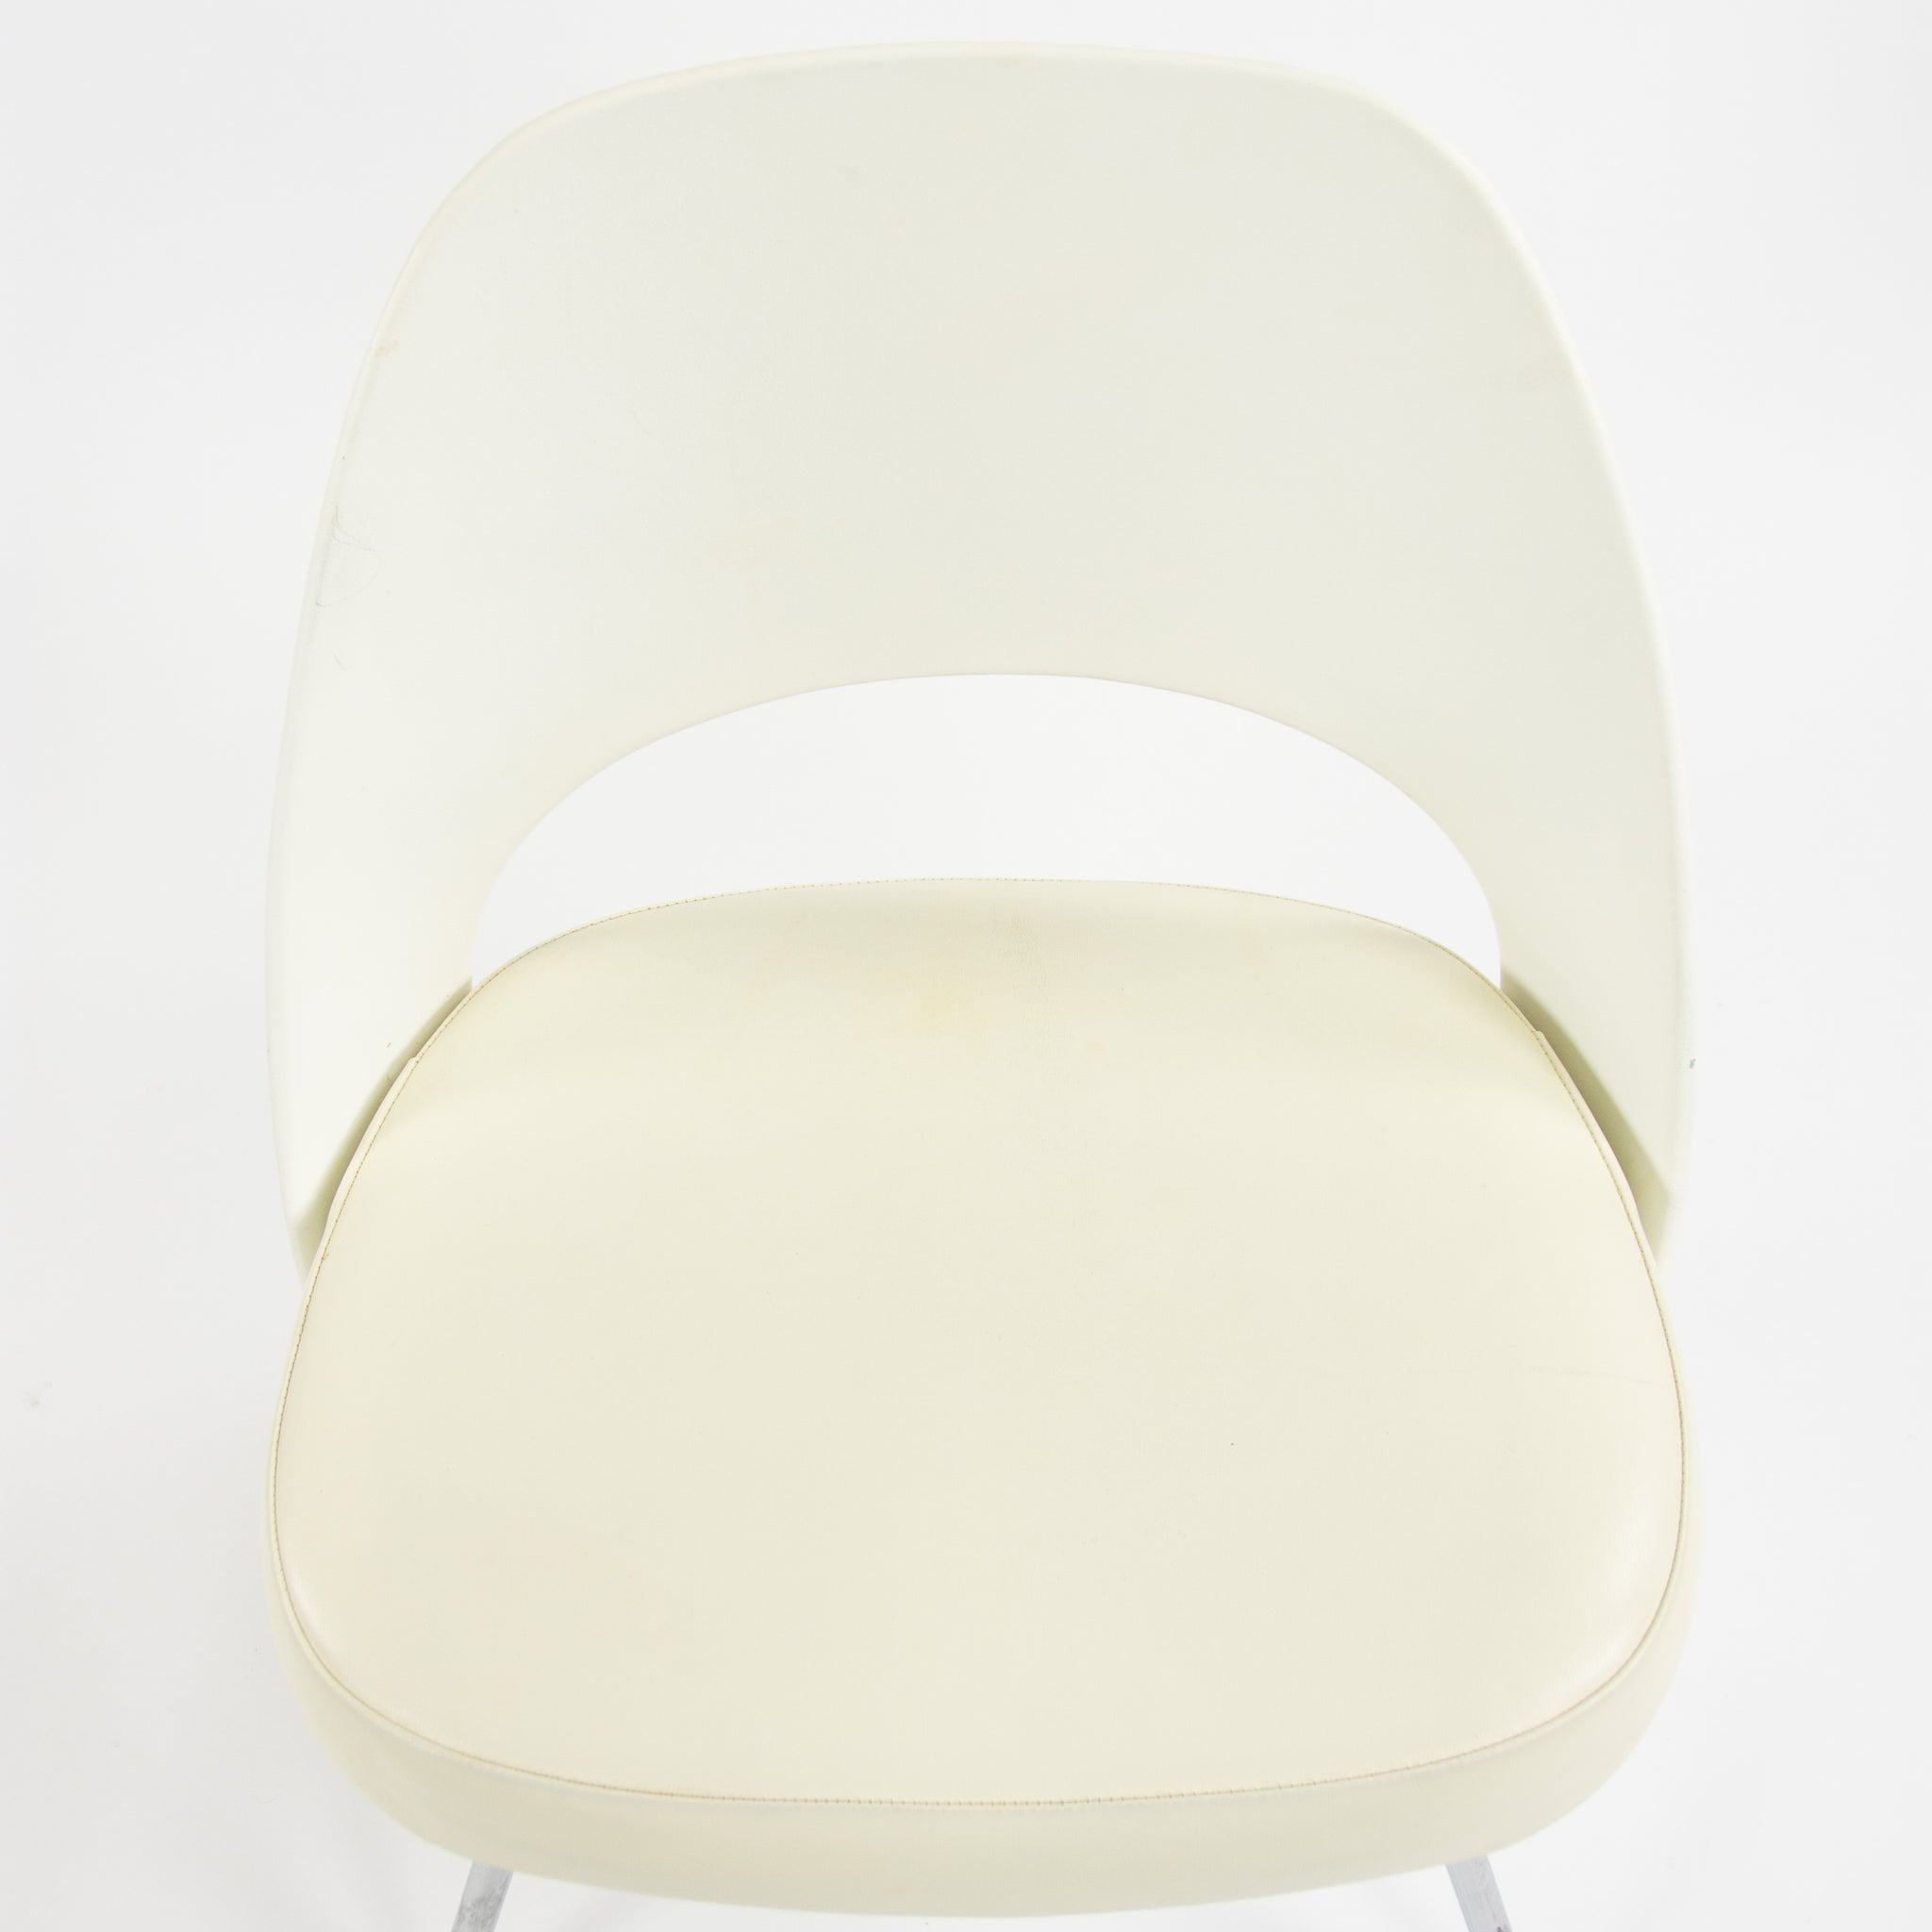 2014 Knoll Studio Eero Saarinen Executive Armless Side Chairs White 150+ Available